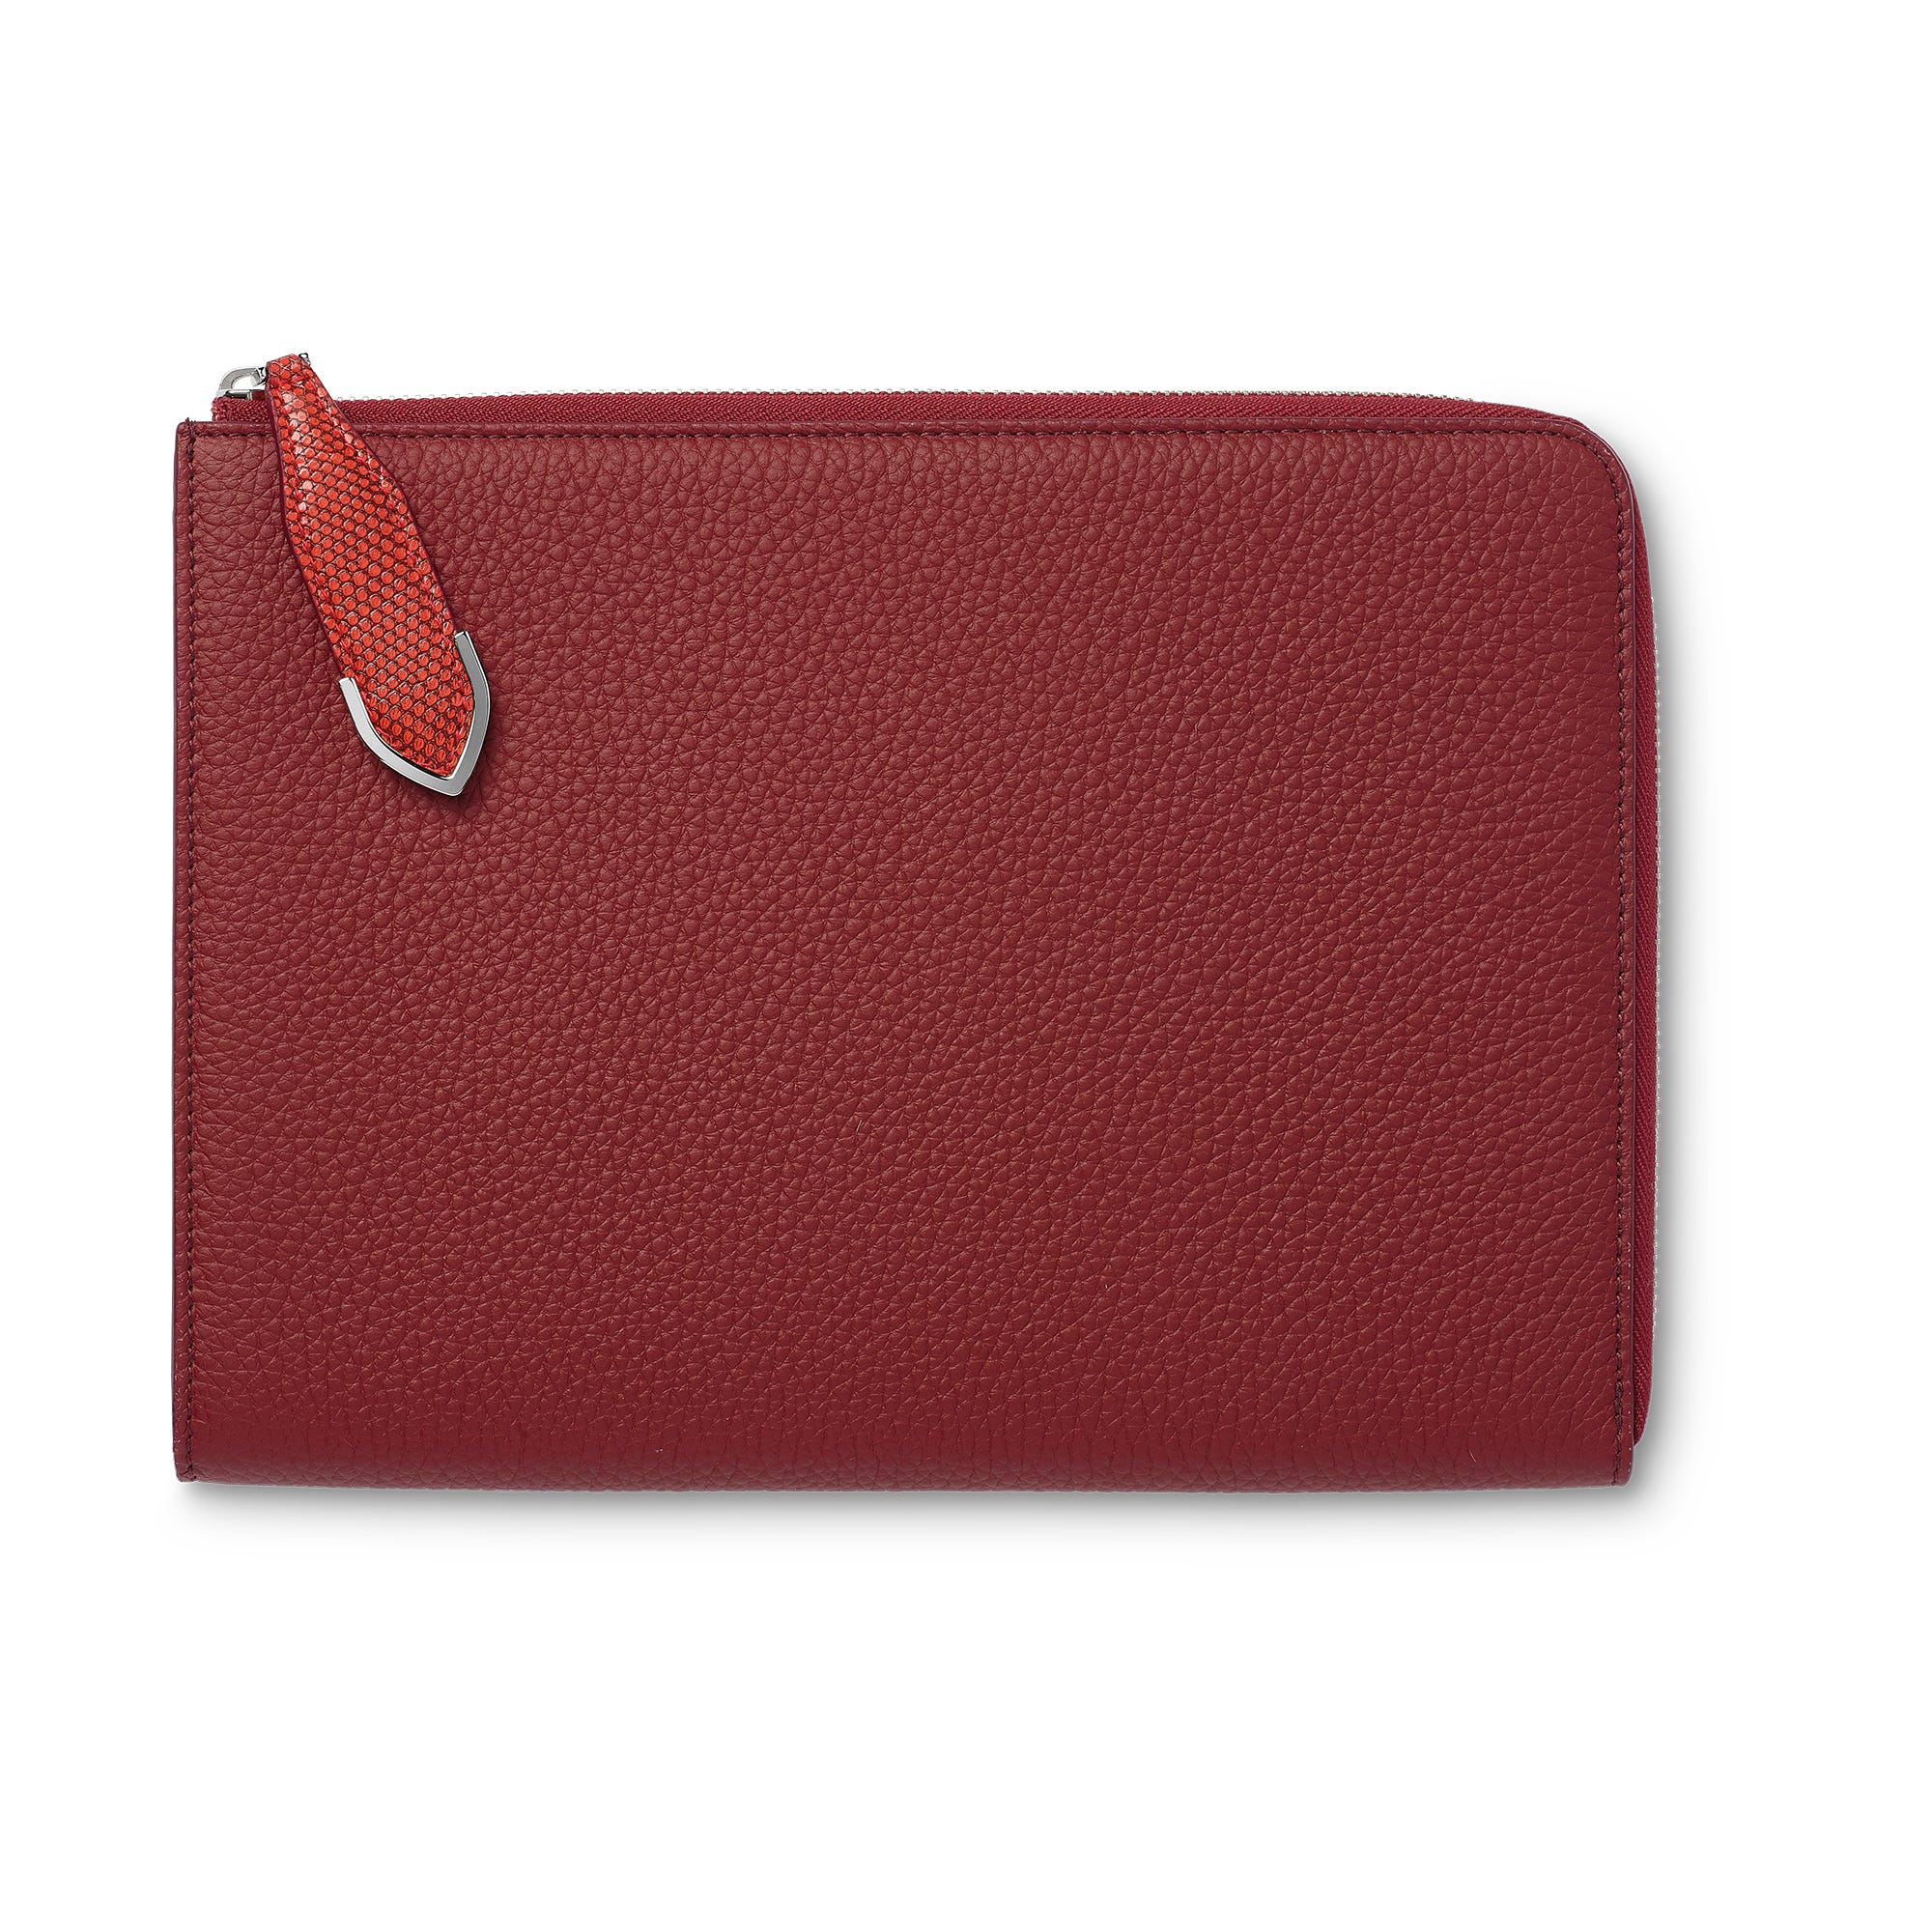 Taylor Zip iPad Pocket in Cranberry Bullskin & Flame Lizard